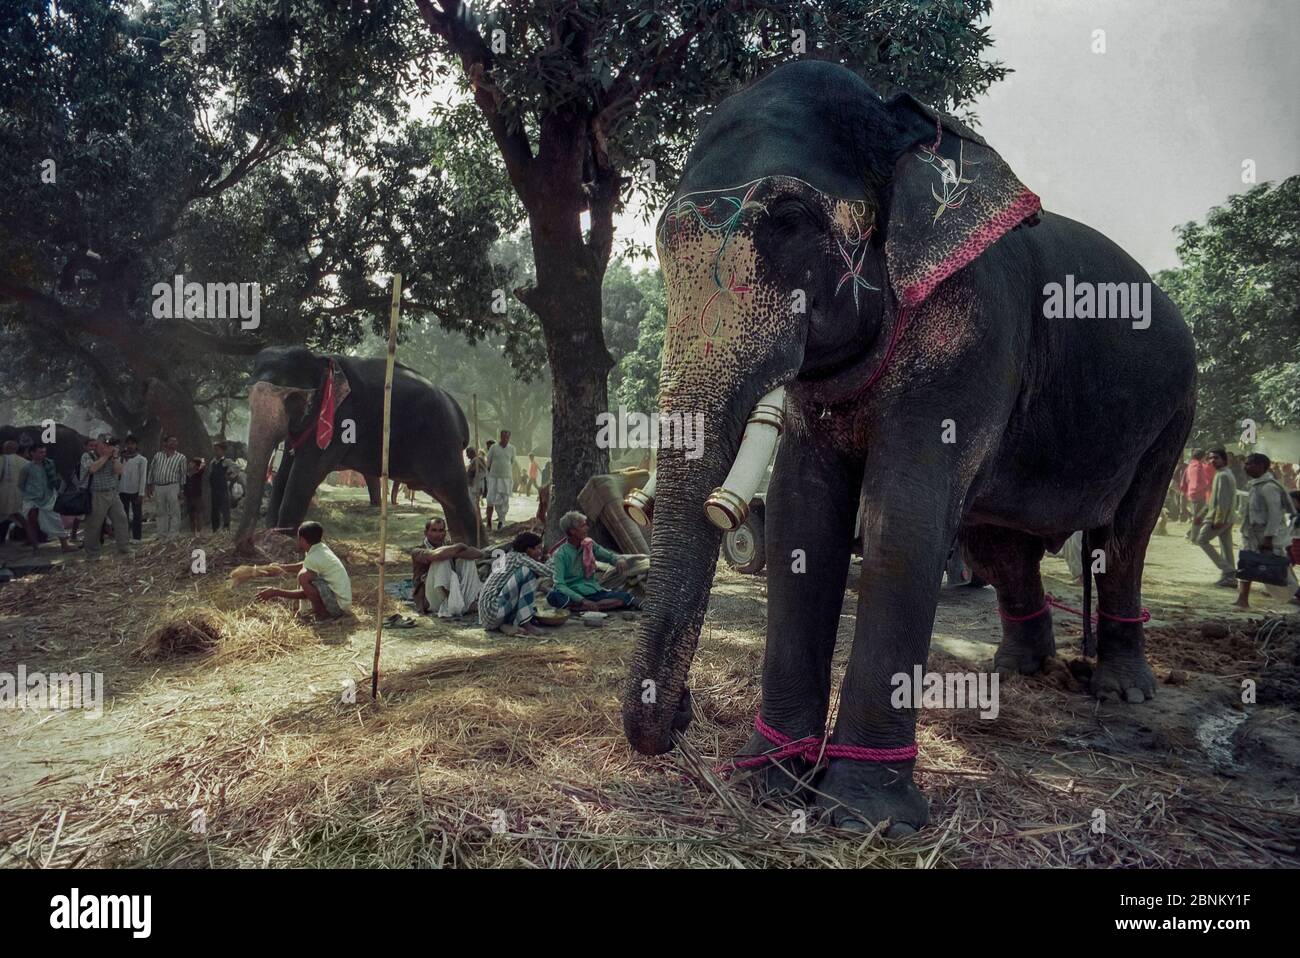 27 Mai 2017 Elefantenmarkt in Sonpur Mela der große Rinder / Elefantenmarkt findet in Sonepur mela Patna Bihar Indien statt Stockfoto